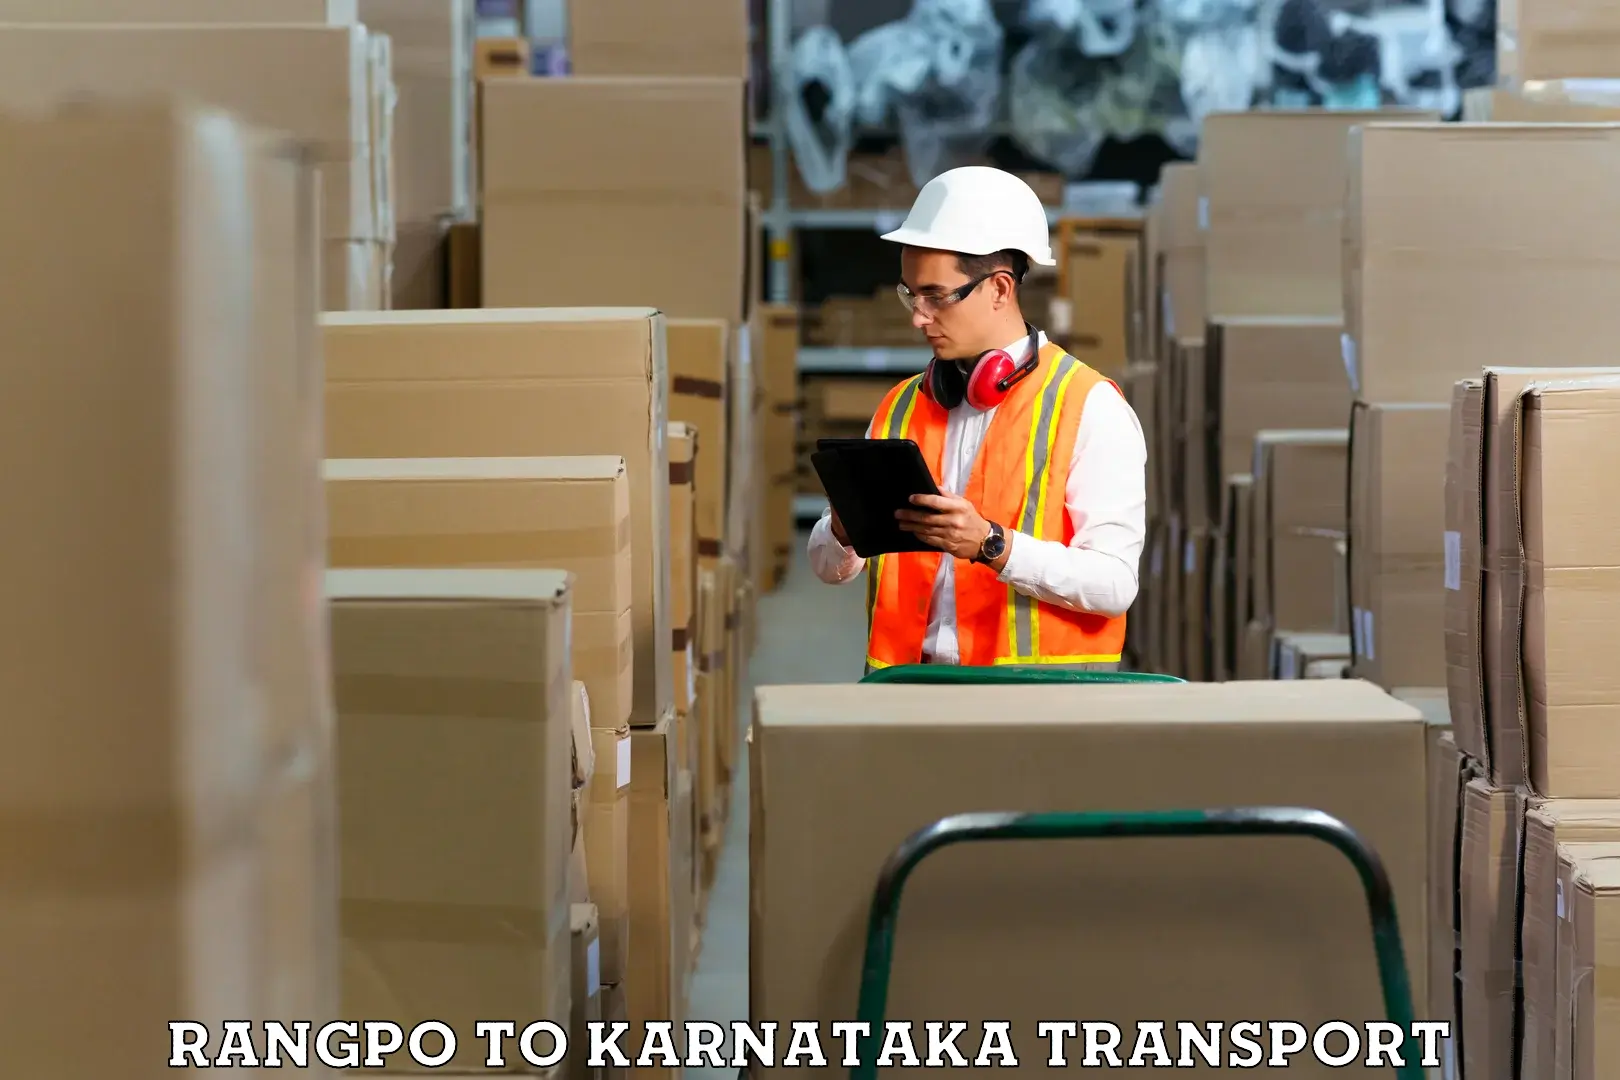 Container transport service Rangpo to yedrami